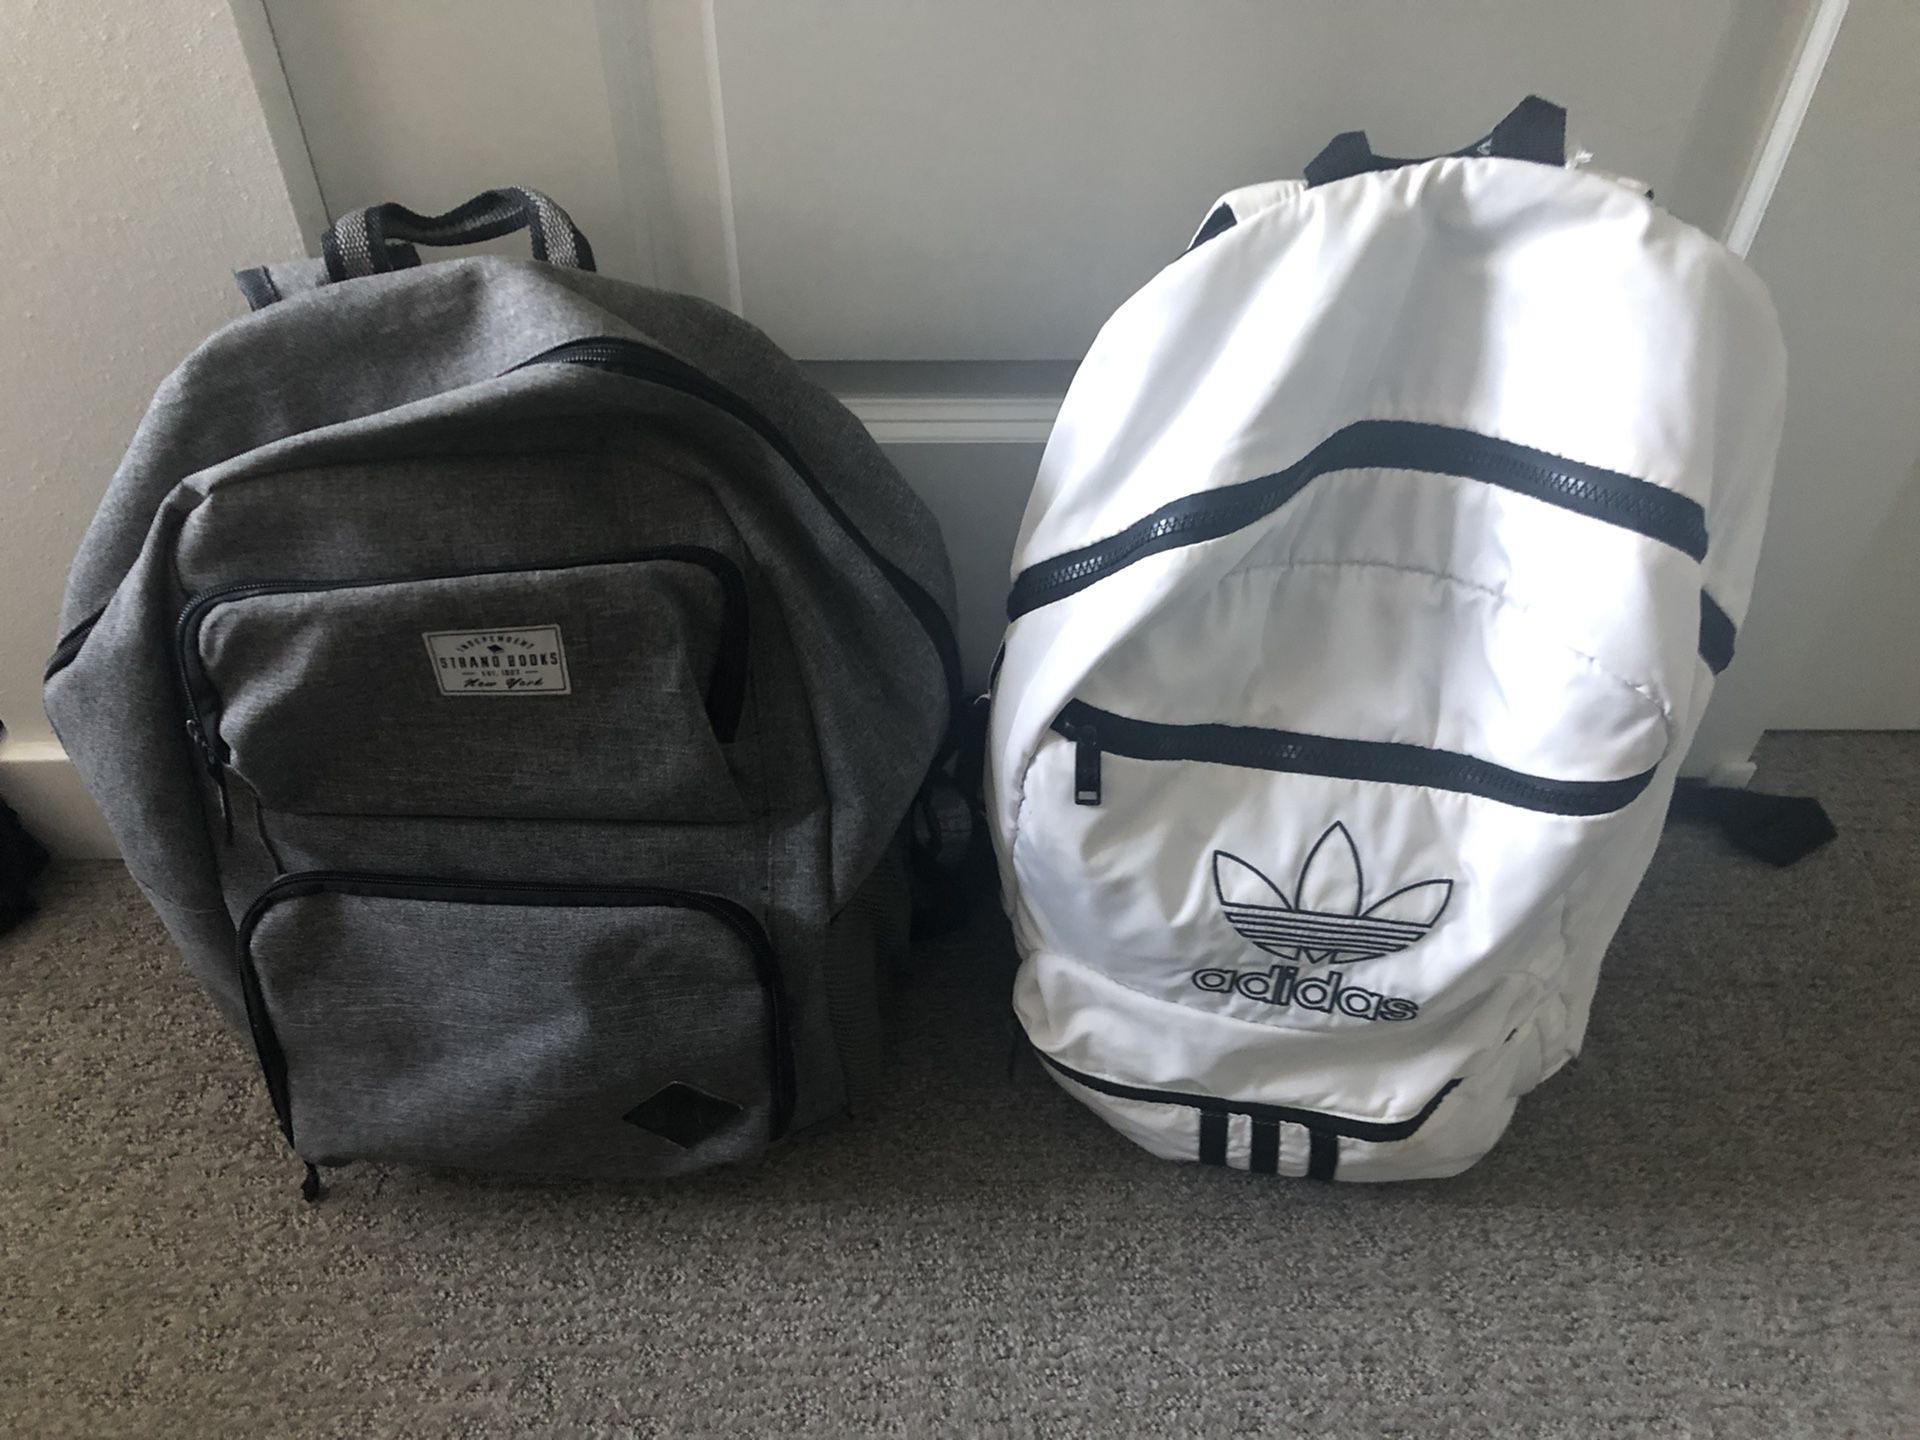 2 backpacks, $10 each